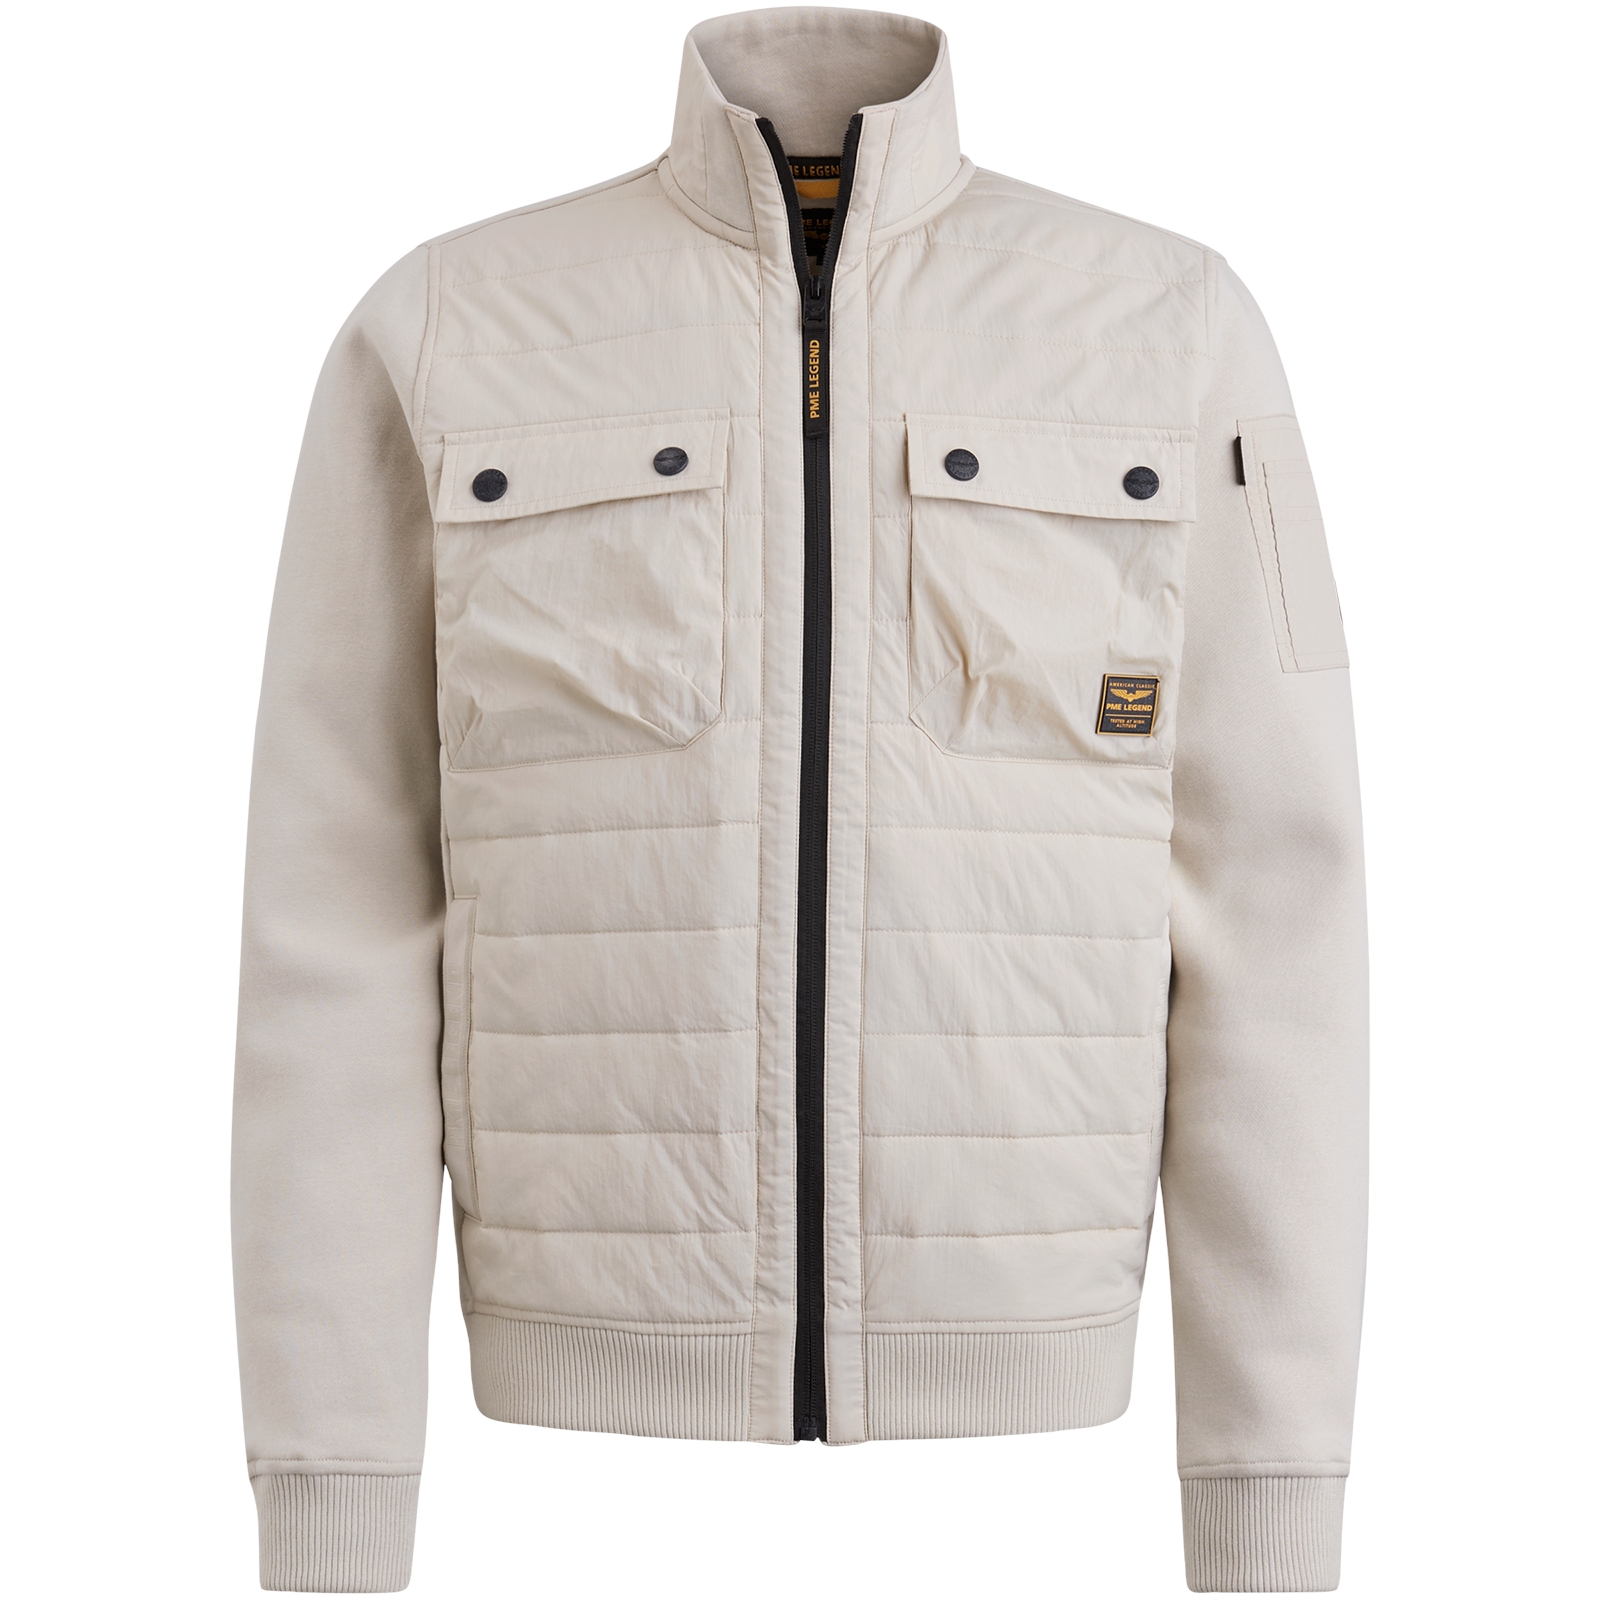 PME Legend Zip jacket sweat mixed padded Bone White 1